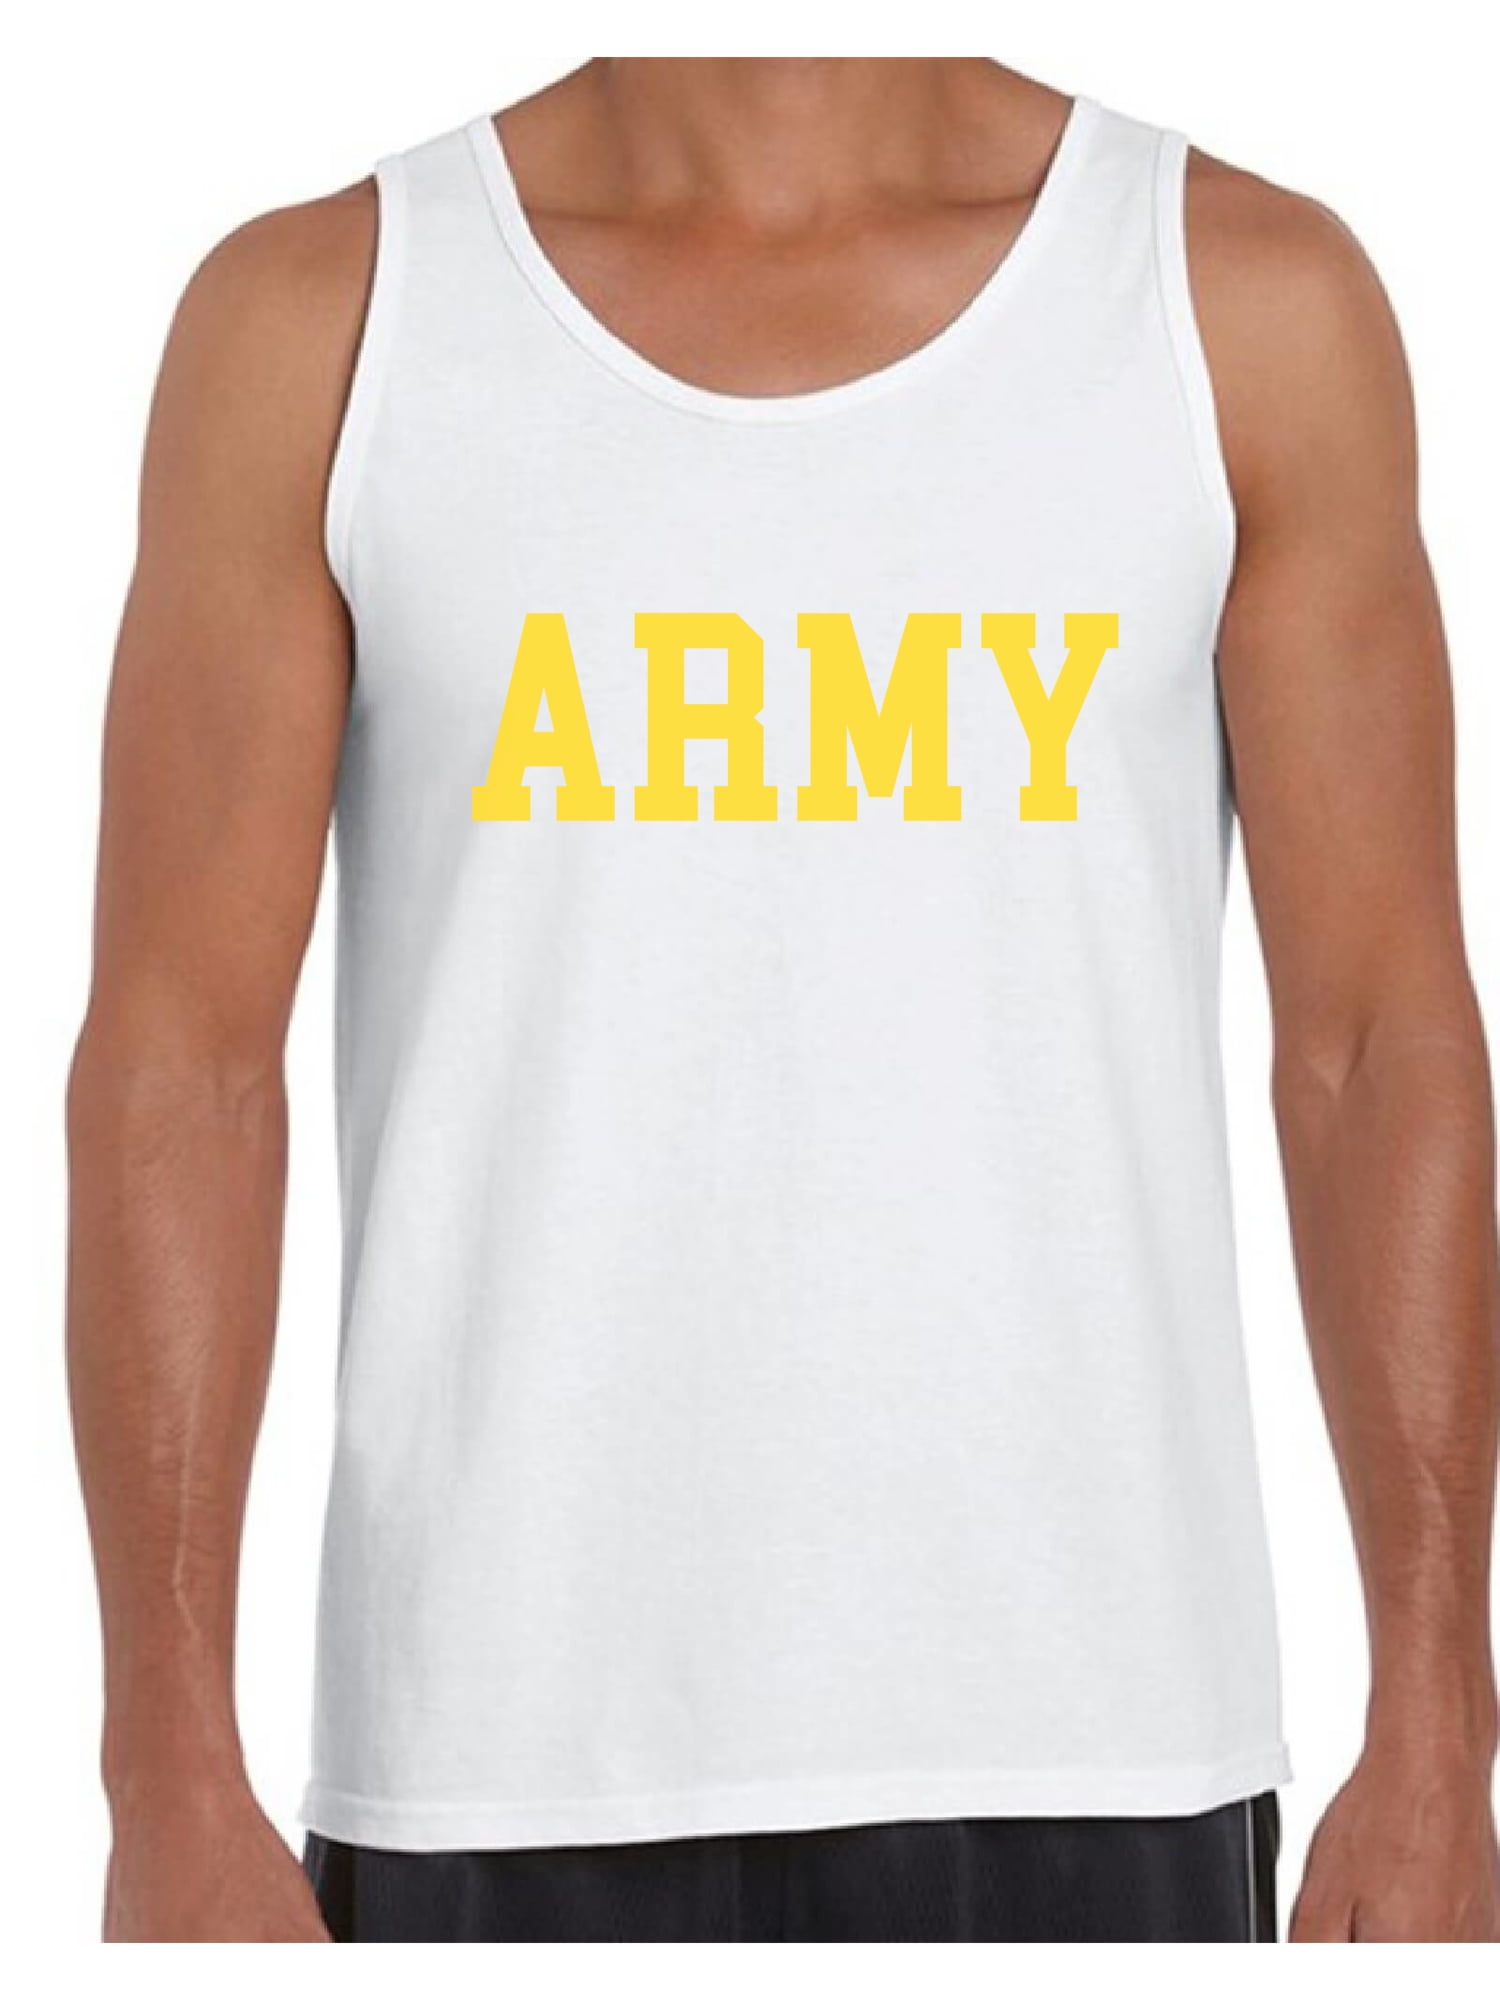 US Army 22nd Signal Brigade Veteran Mens Printed Vest Sports Tank-Top Shirt Leisure Sleeveless Tees